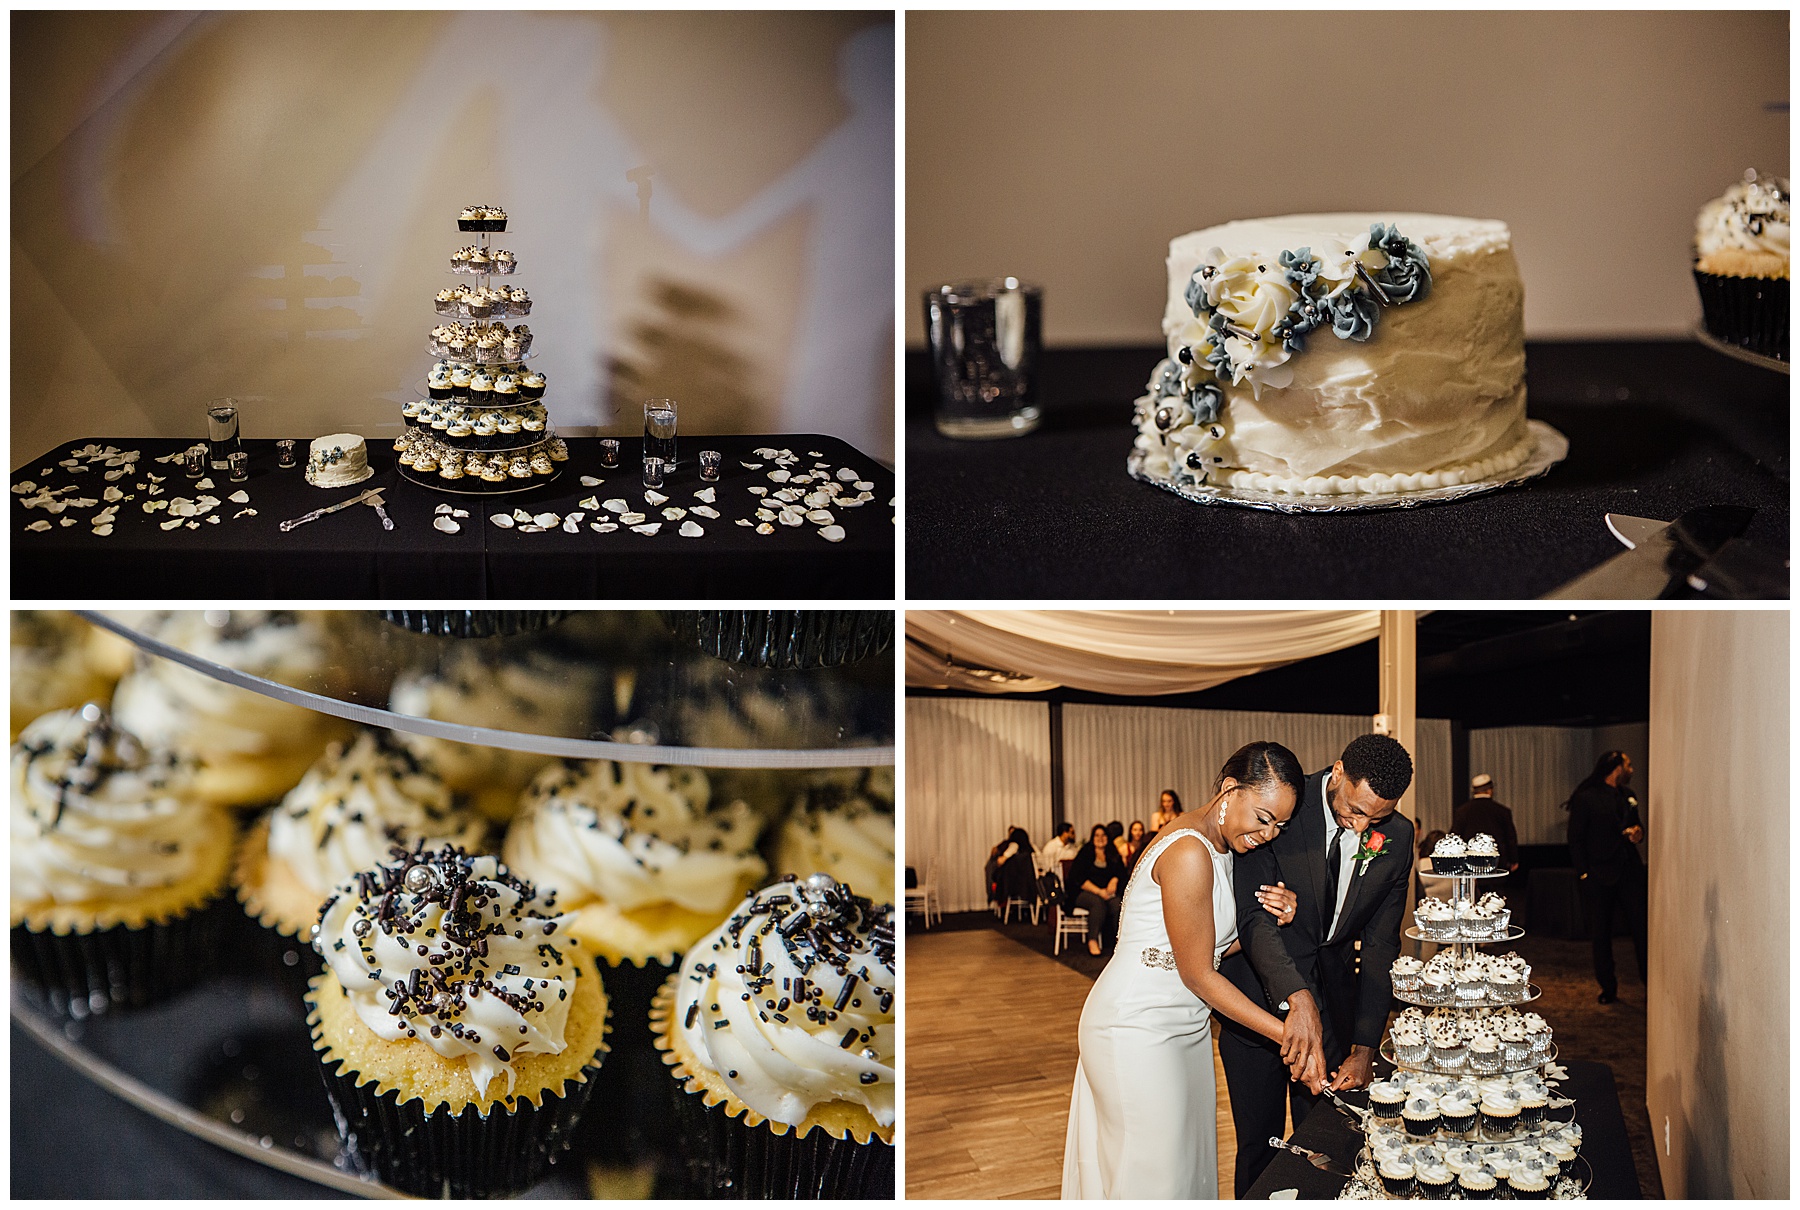 Wedding cake photos 